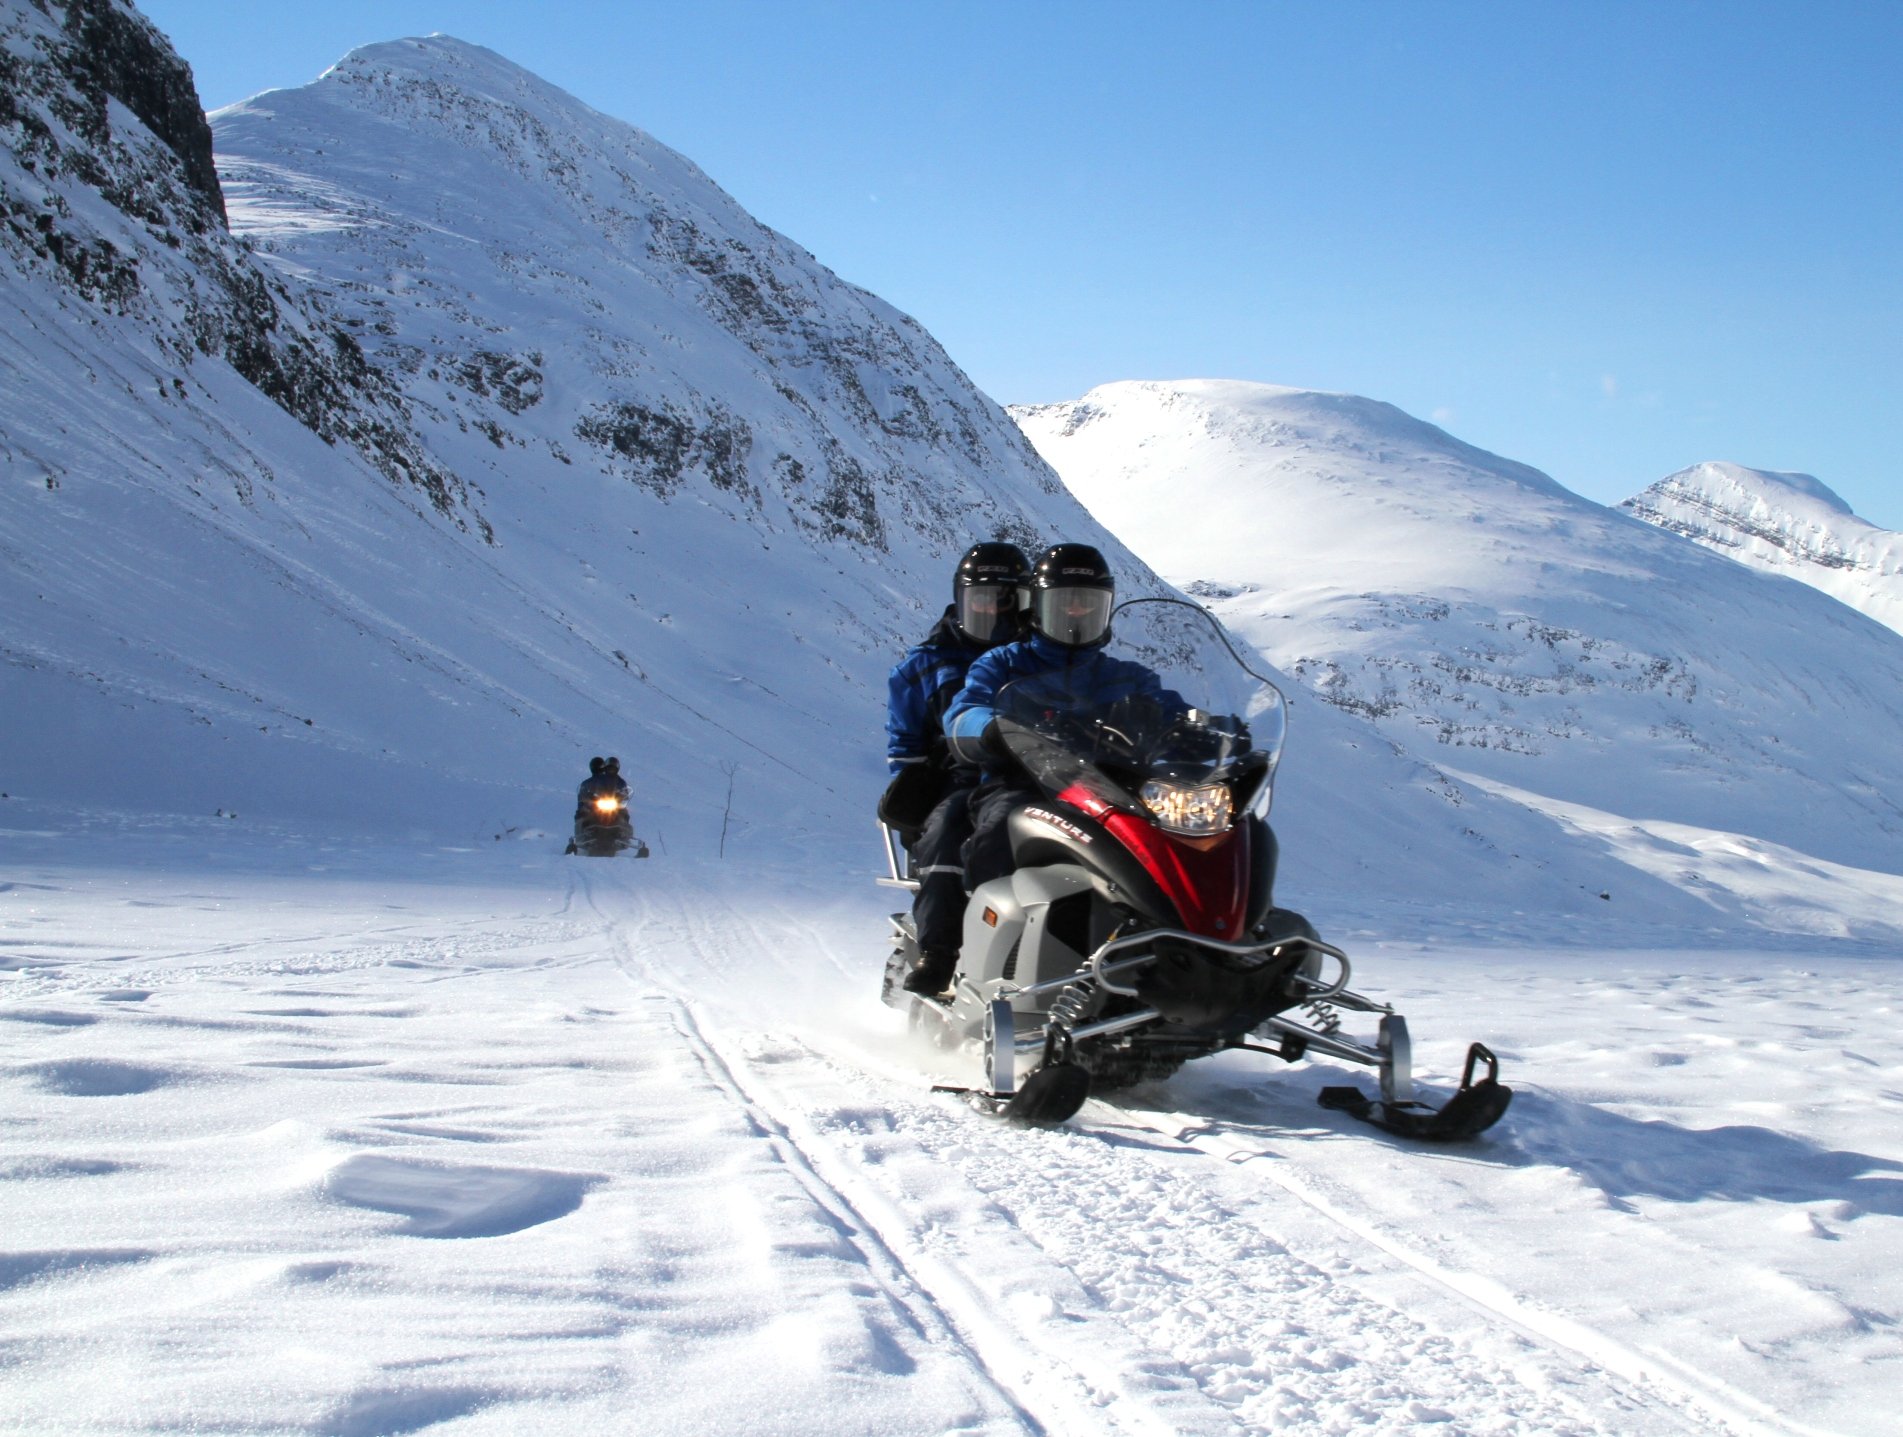 Full throttle on the mountain top flats © Lyngsfjord Adventure